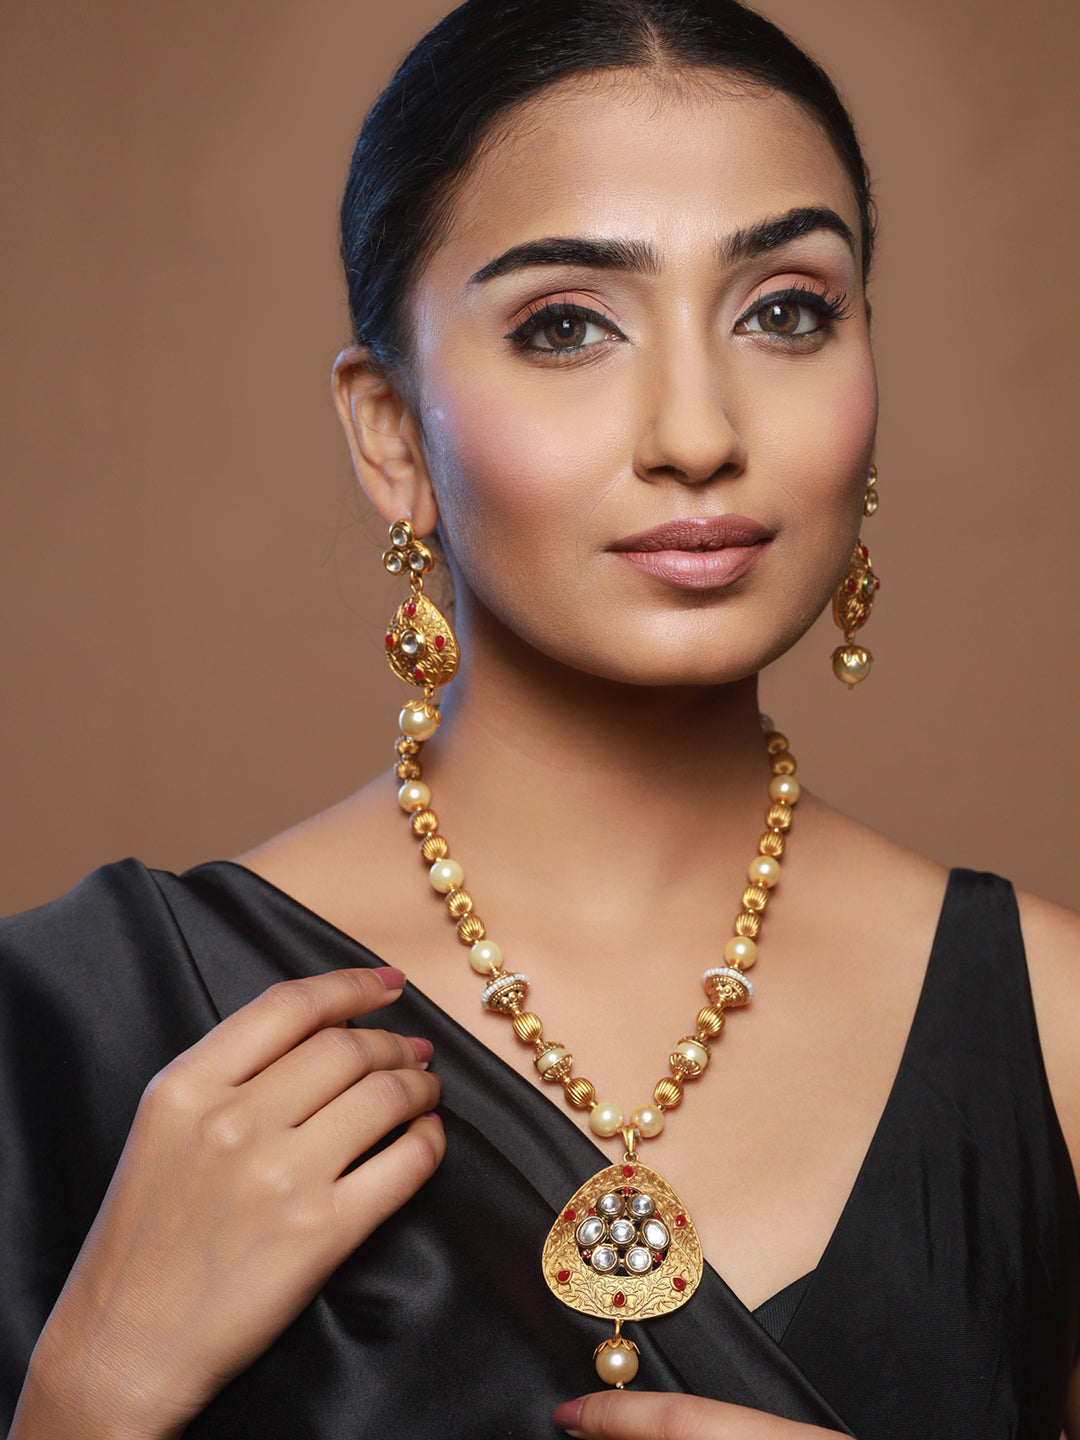 Priyaasi Stuuded Floral Kundan Pearl Gold-Plated Jewellery Set